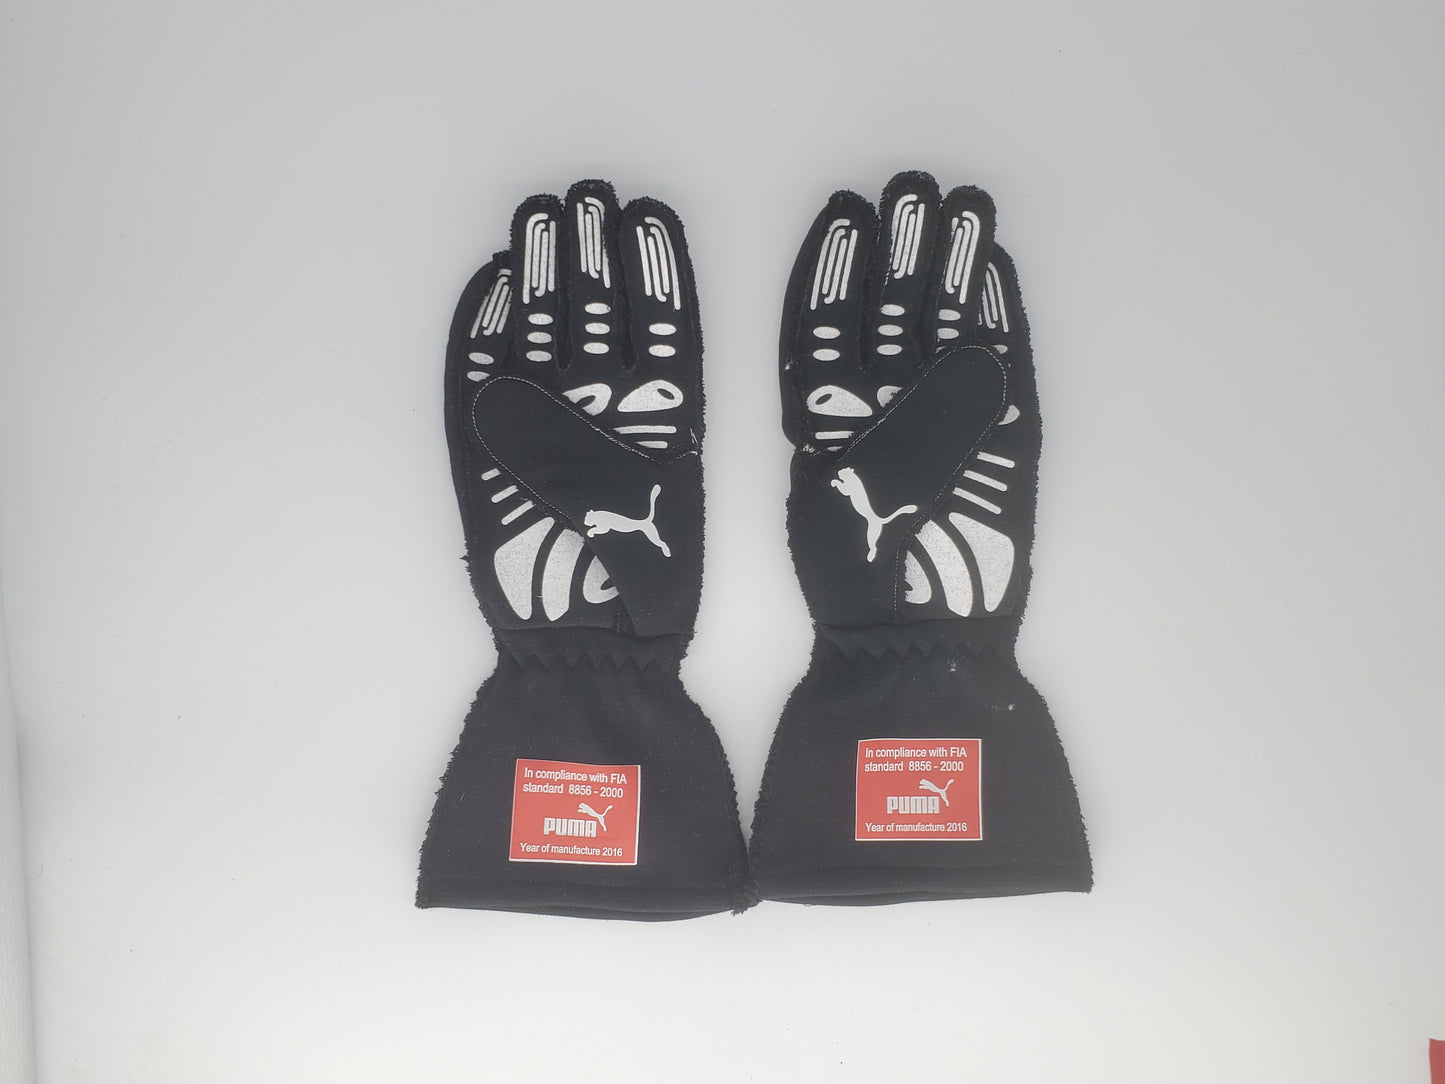 Puma x Tom's racing gloves. Size 10